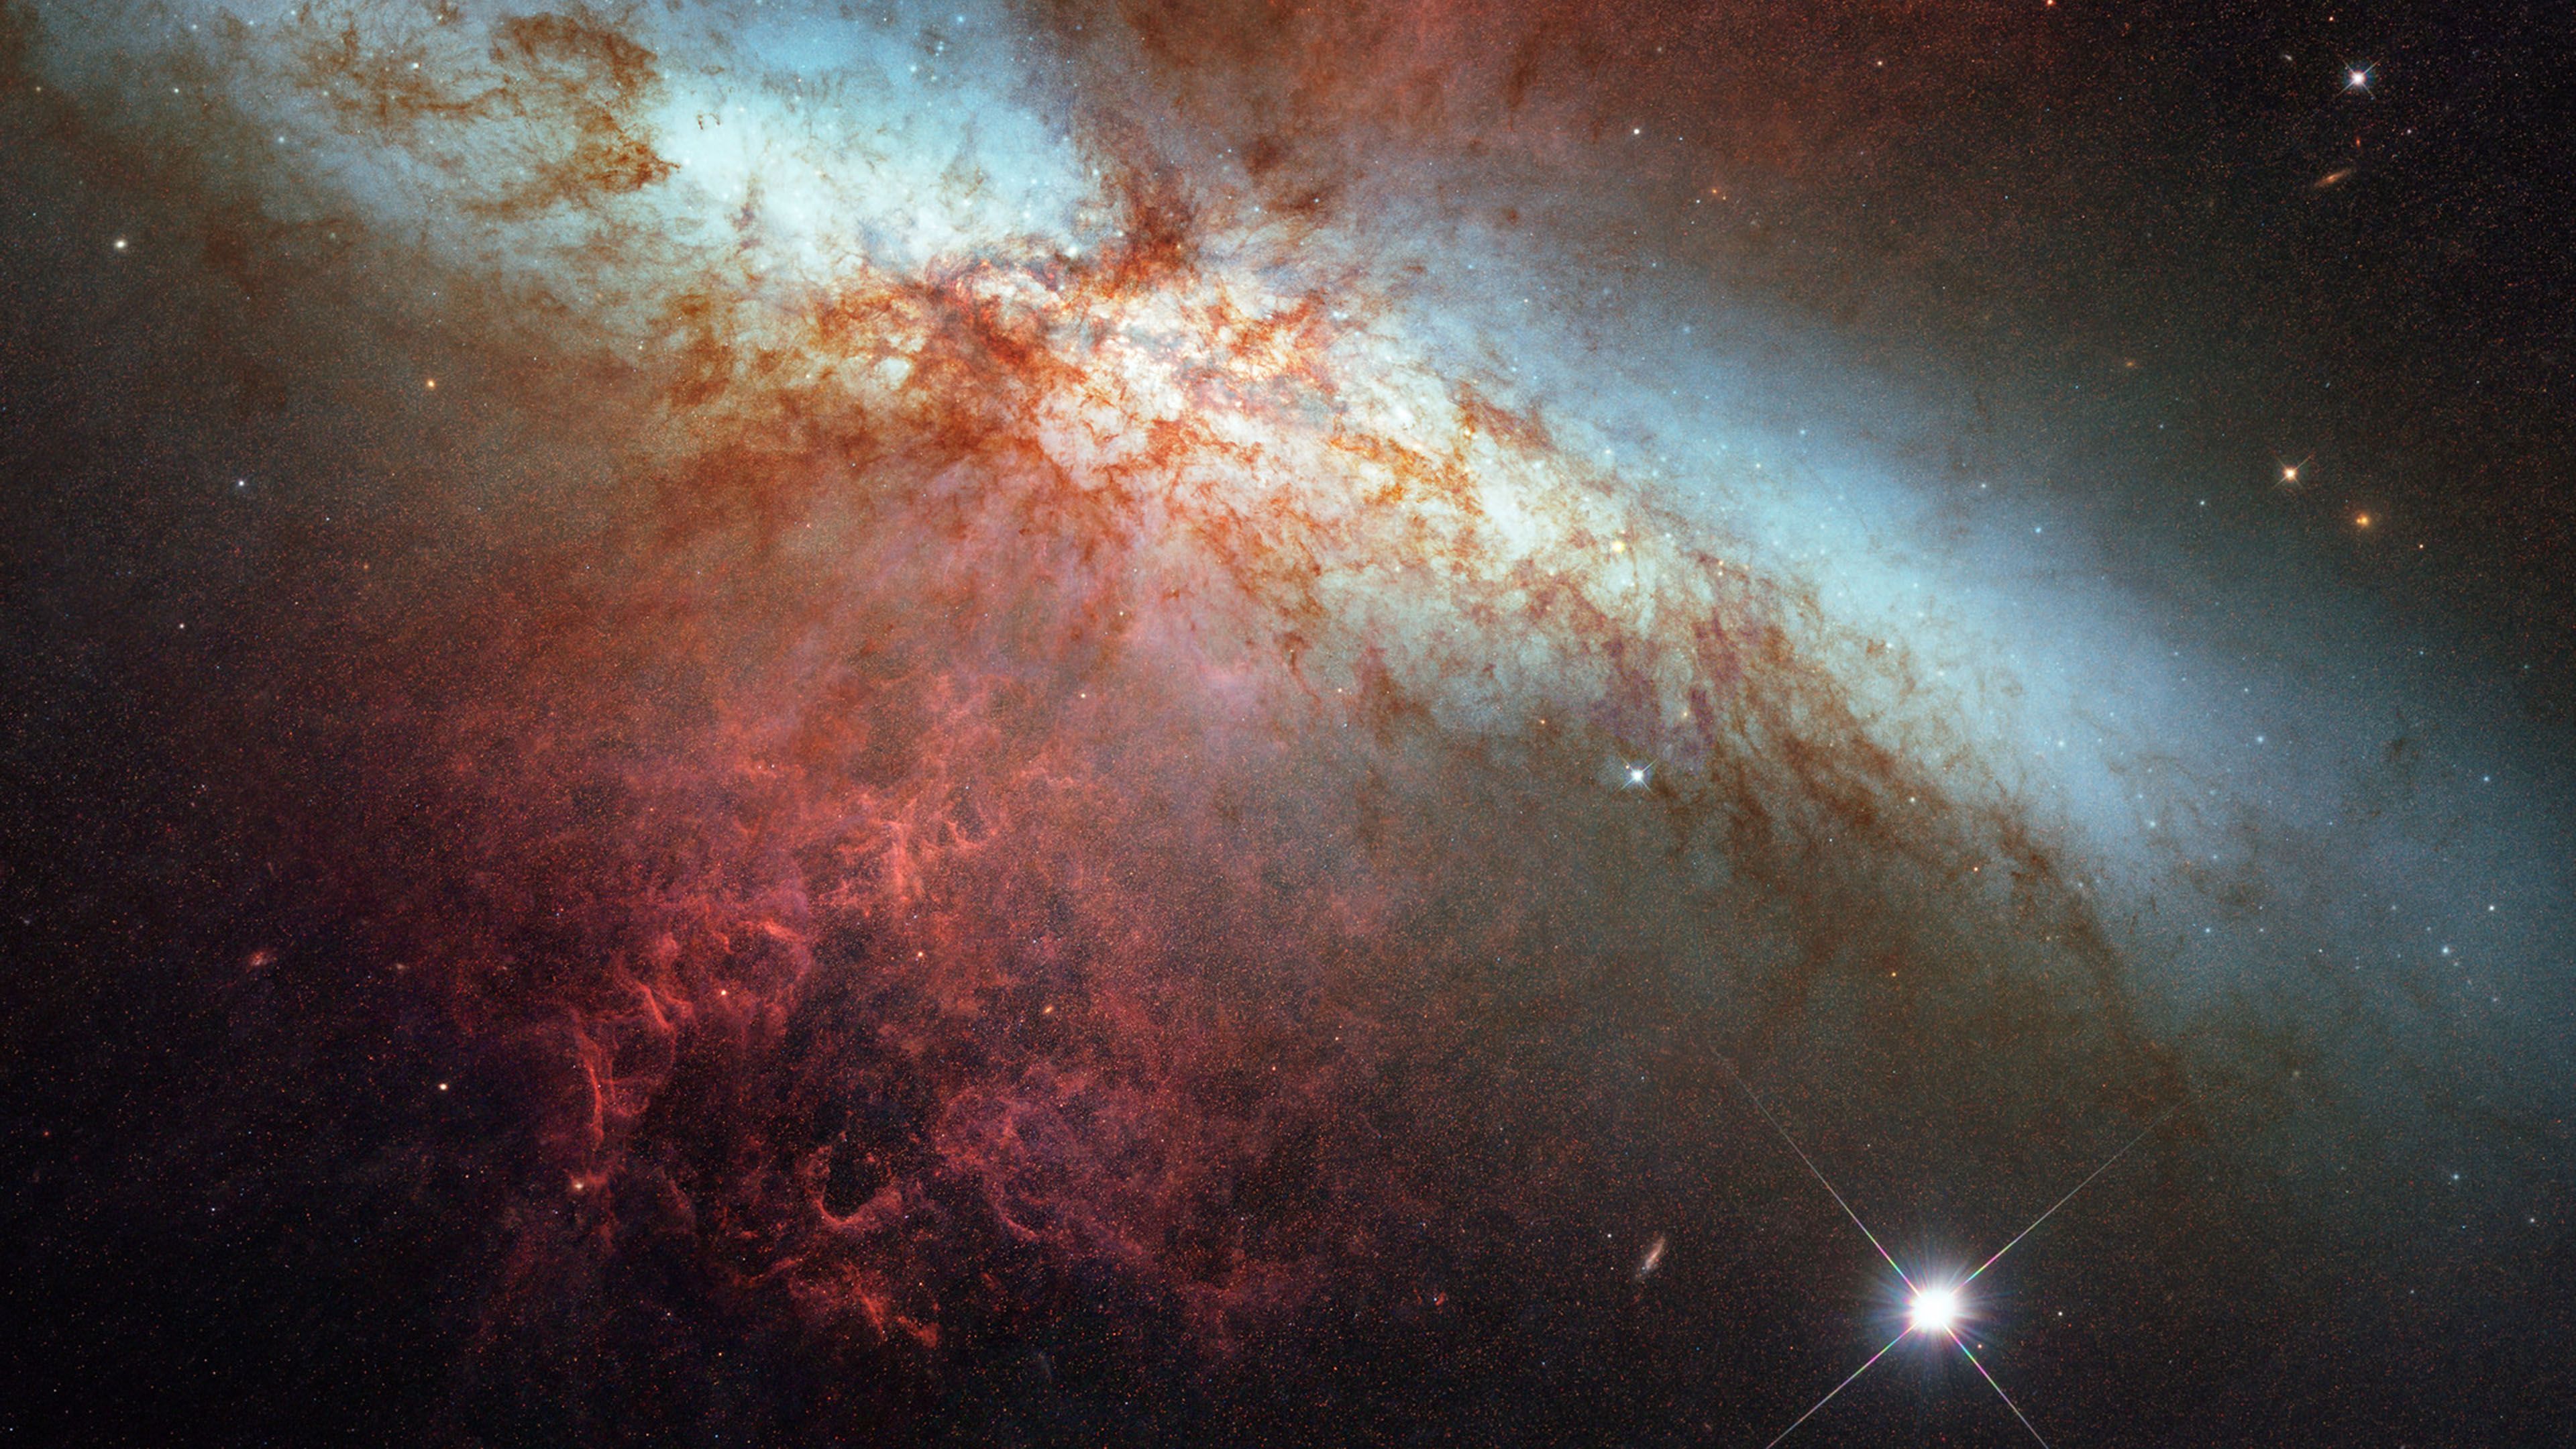 Supernova HD Wallpaper and Background Image